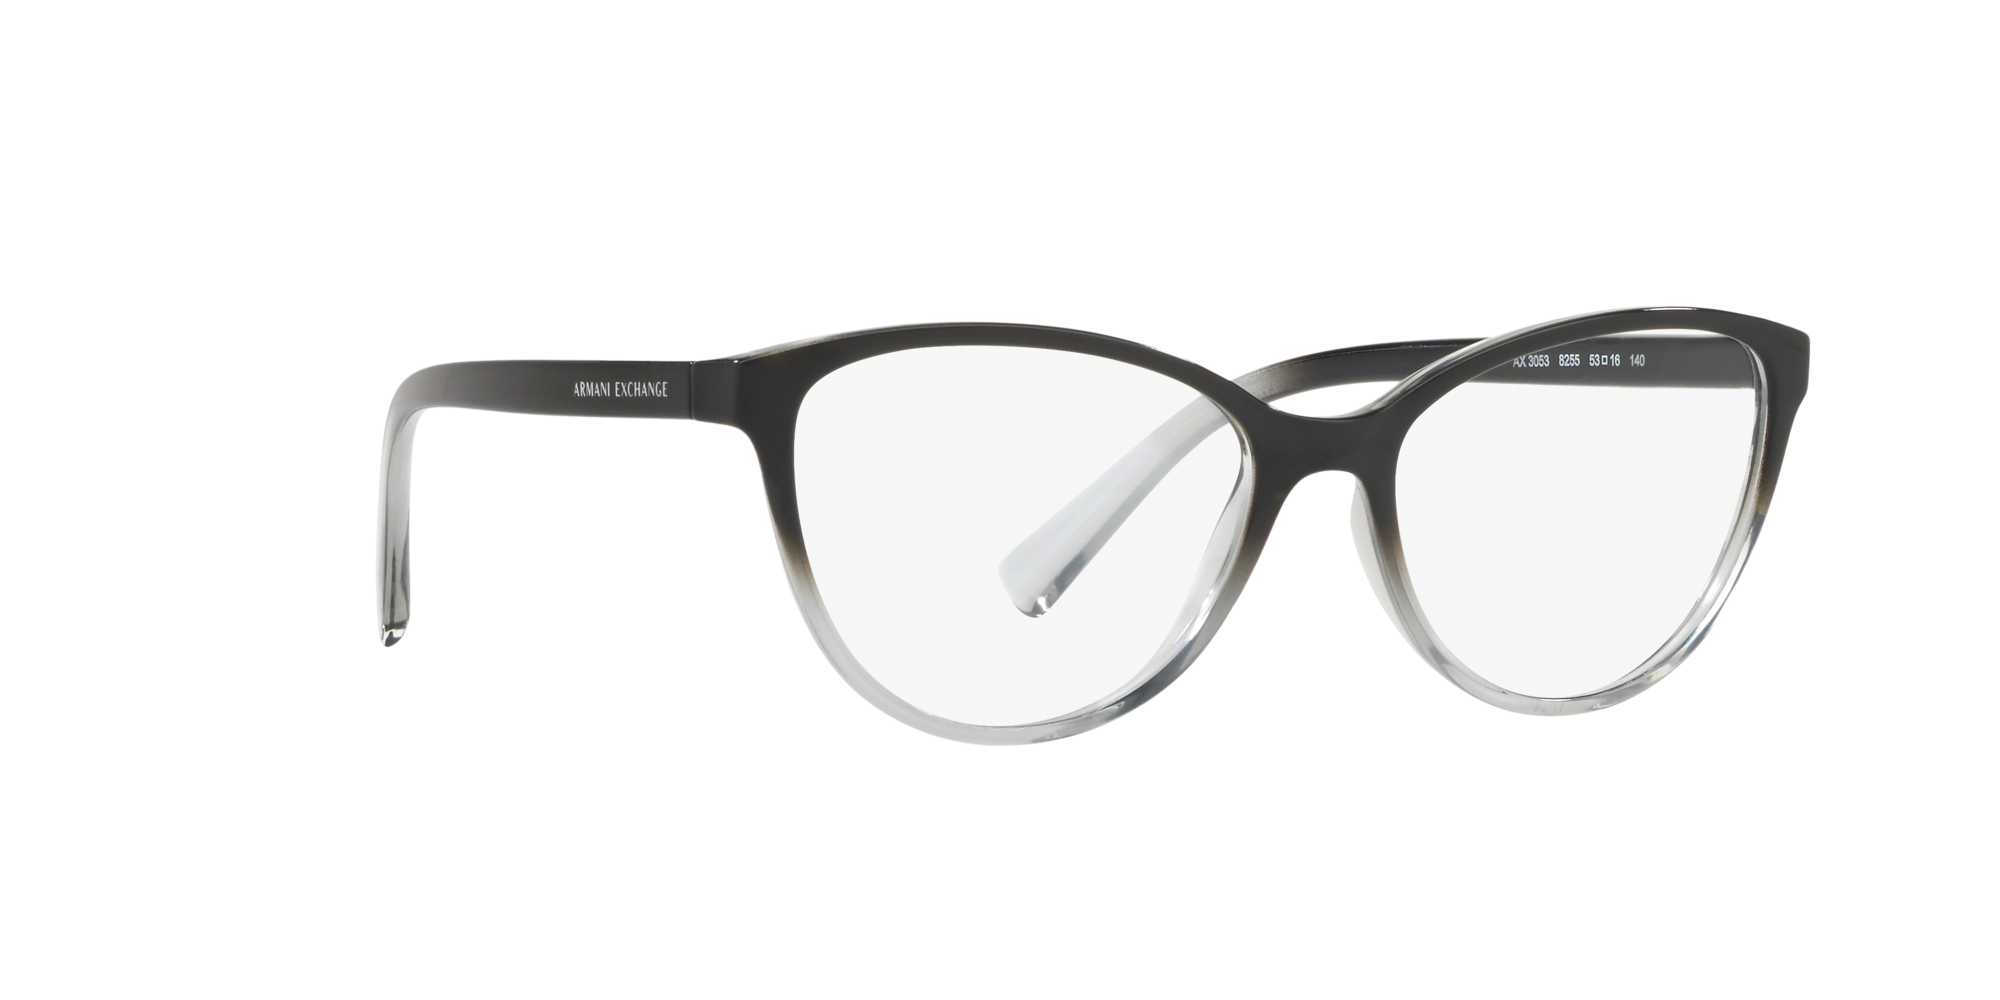 Angle_Right01 Armani Exchange AX 8255 (8255) Glasses Transparent / Black